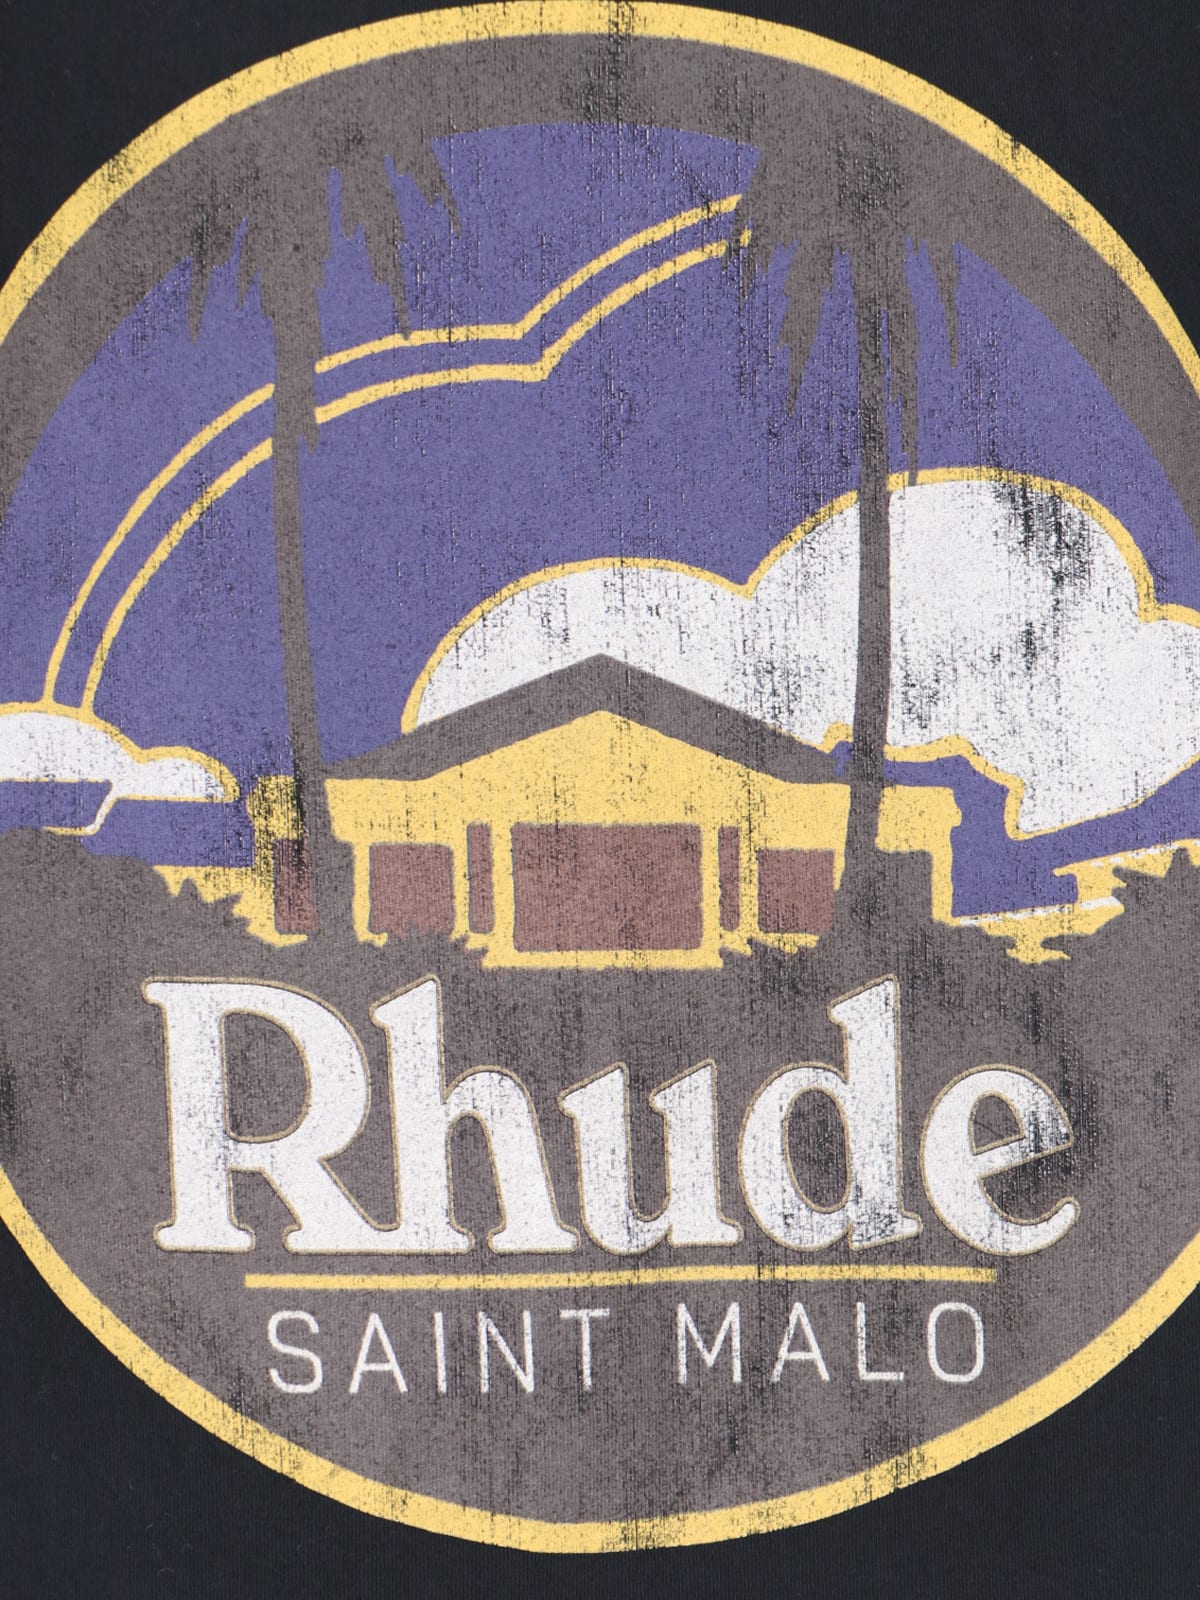 Shop Rhude Saint Malo T-shirt In Black